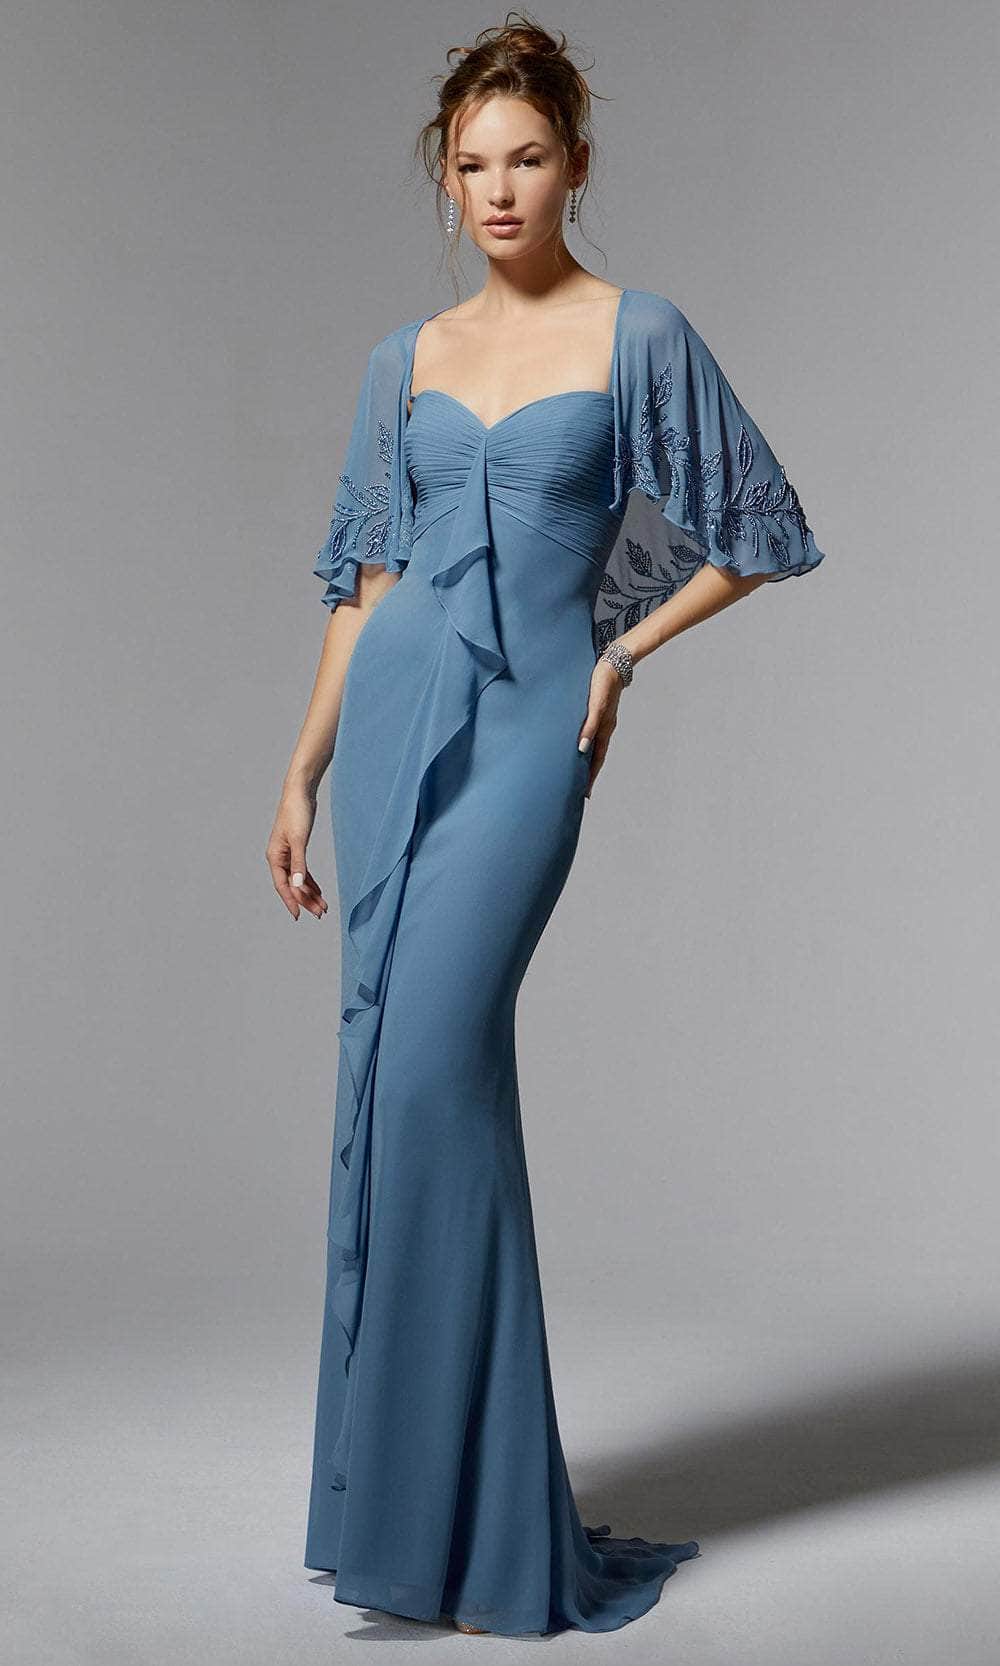 Image of MGNY By Mori Lee 72901 - Empire Waist Evening Dress